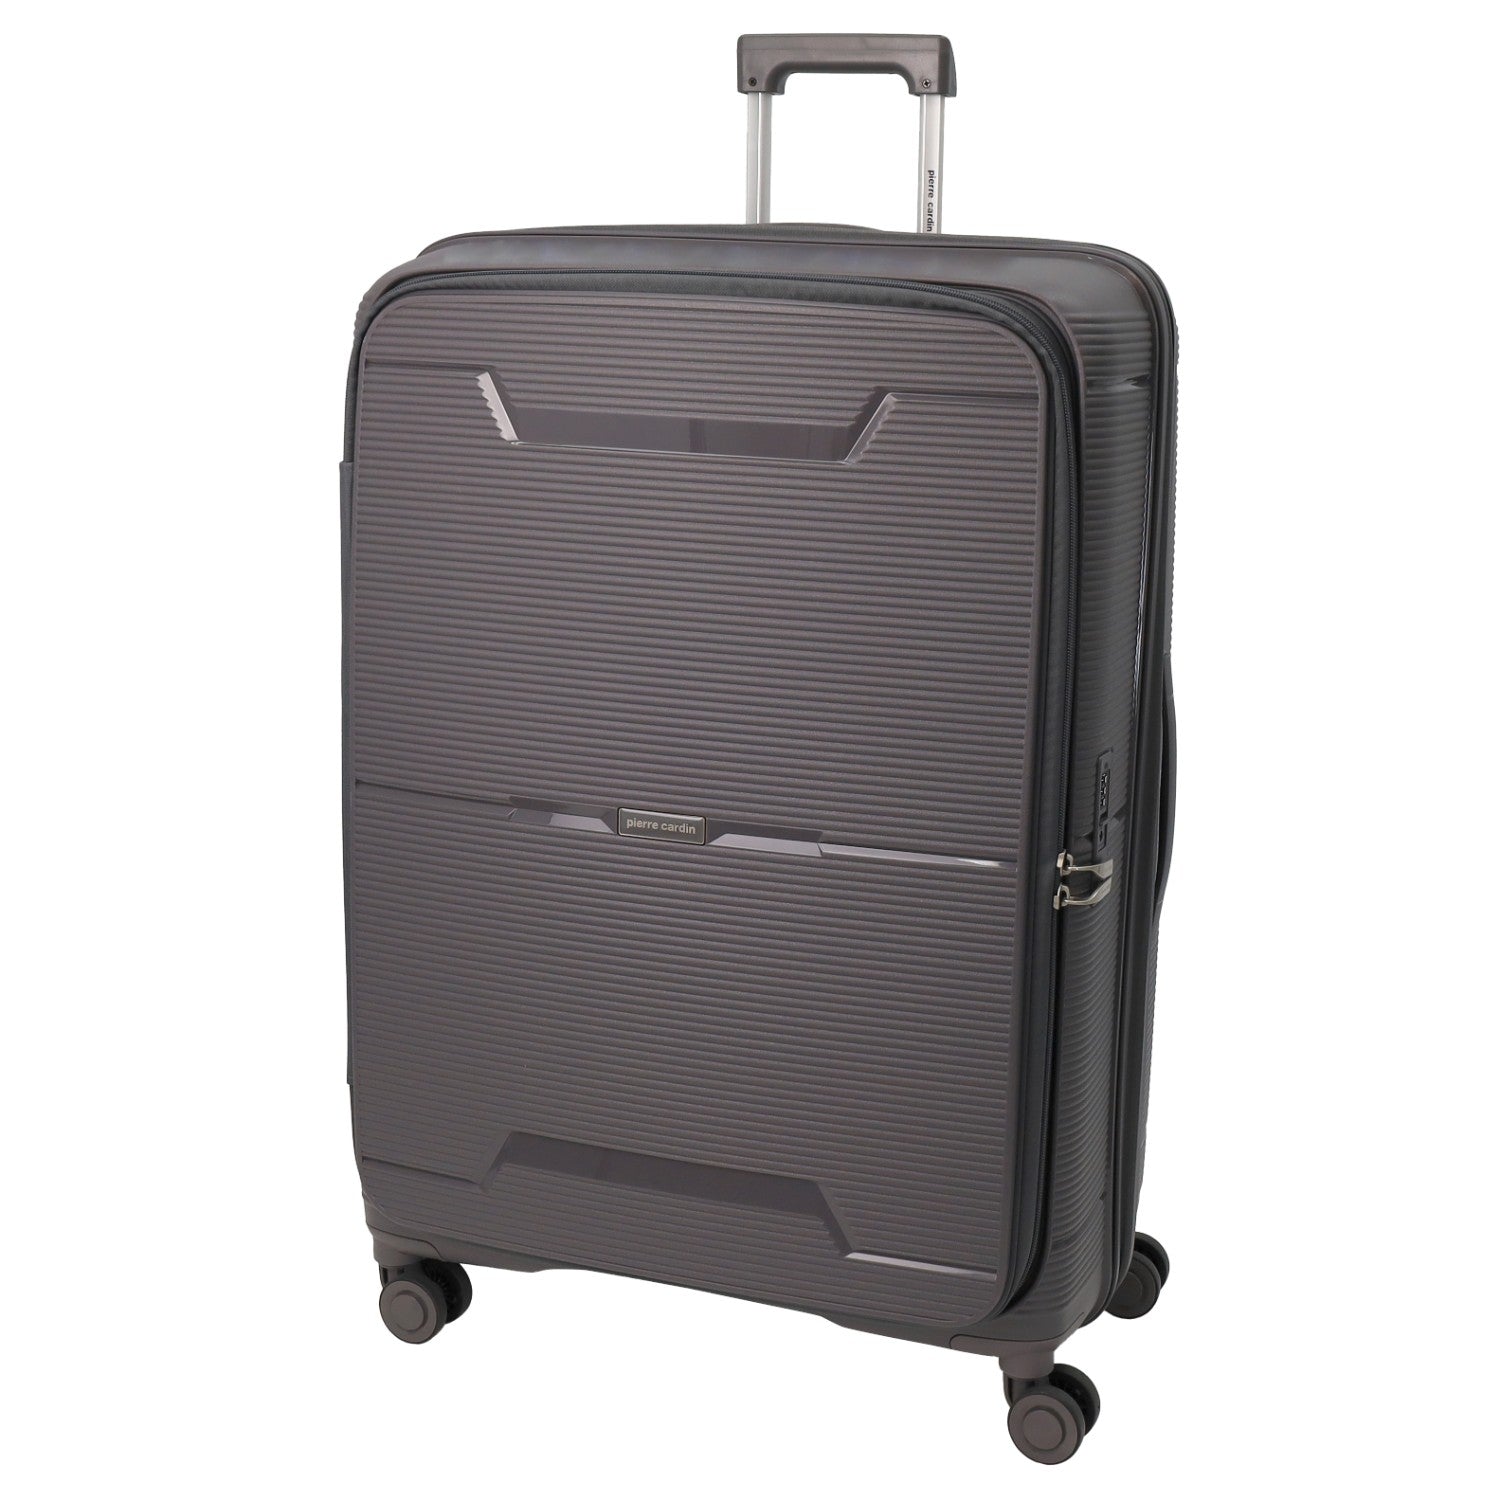 Pierre Cardin - PC3939M 69cm Medium Hard Shell Suitcase - Graphite-1